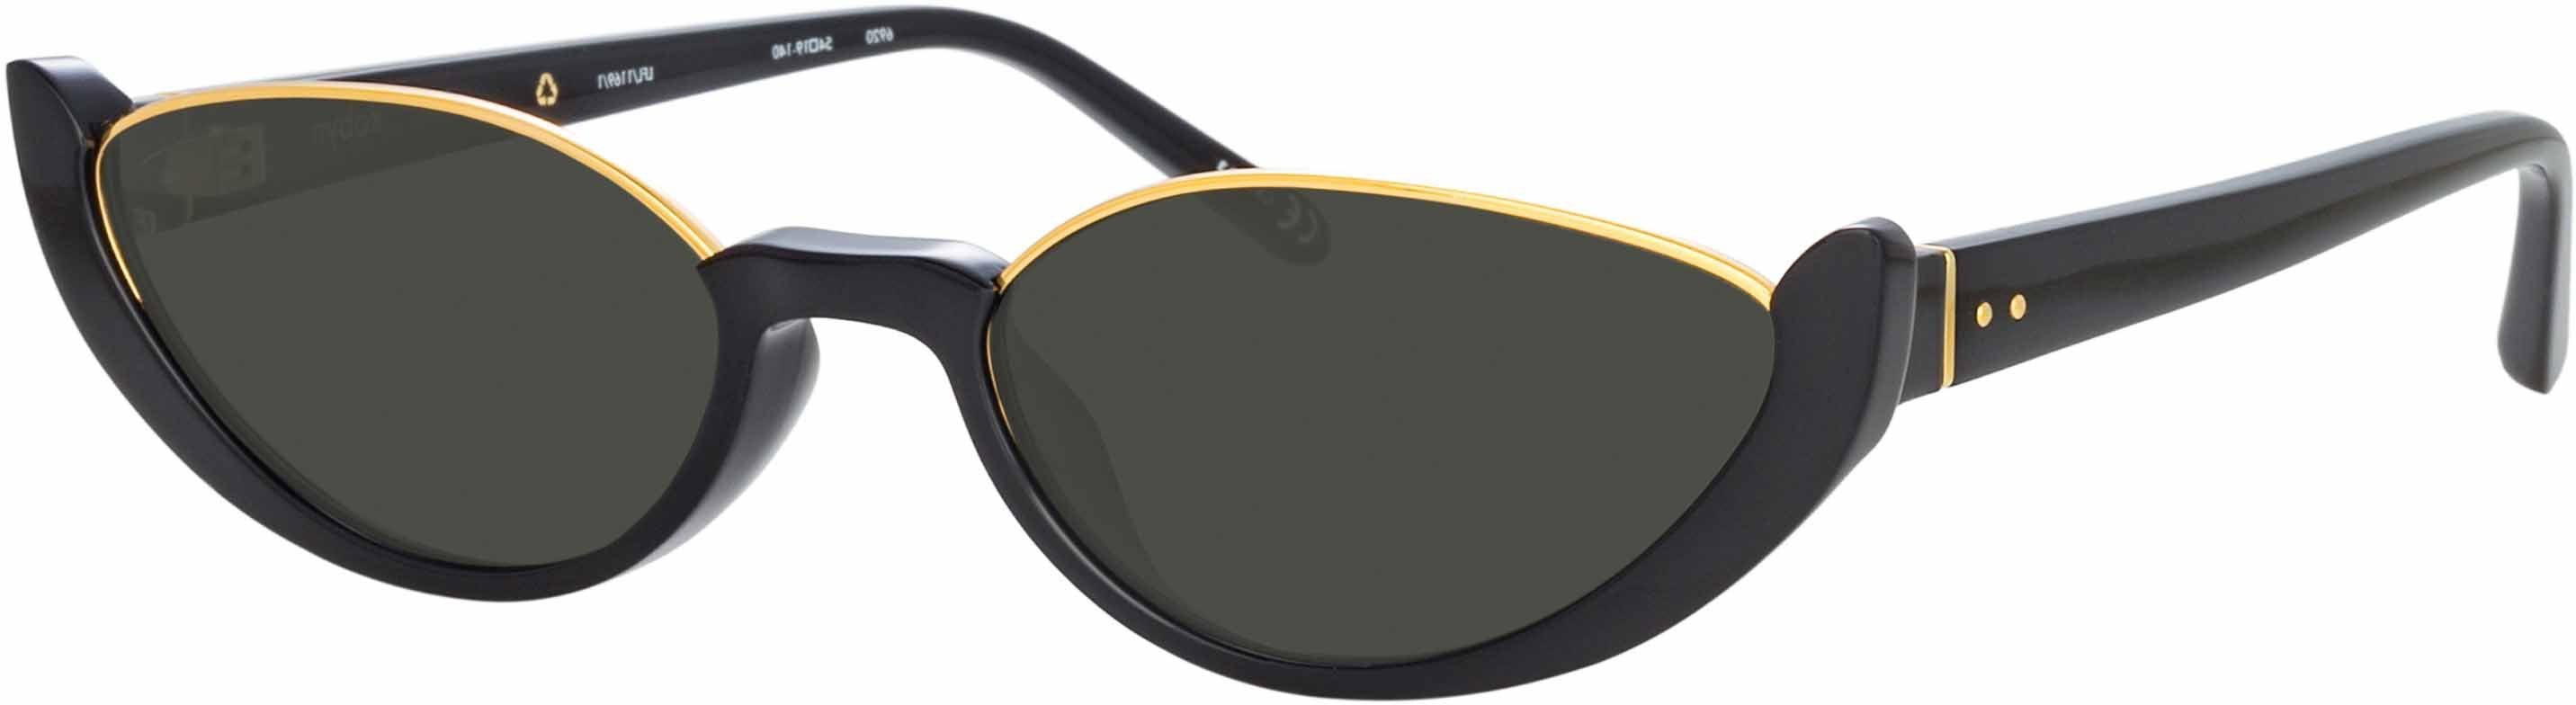 Robyn Cat Eye Sunglasses in Black